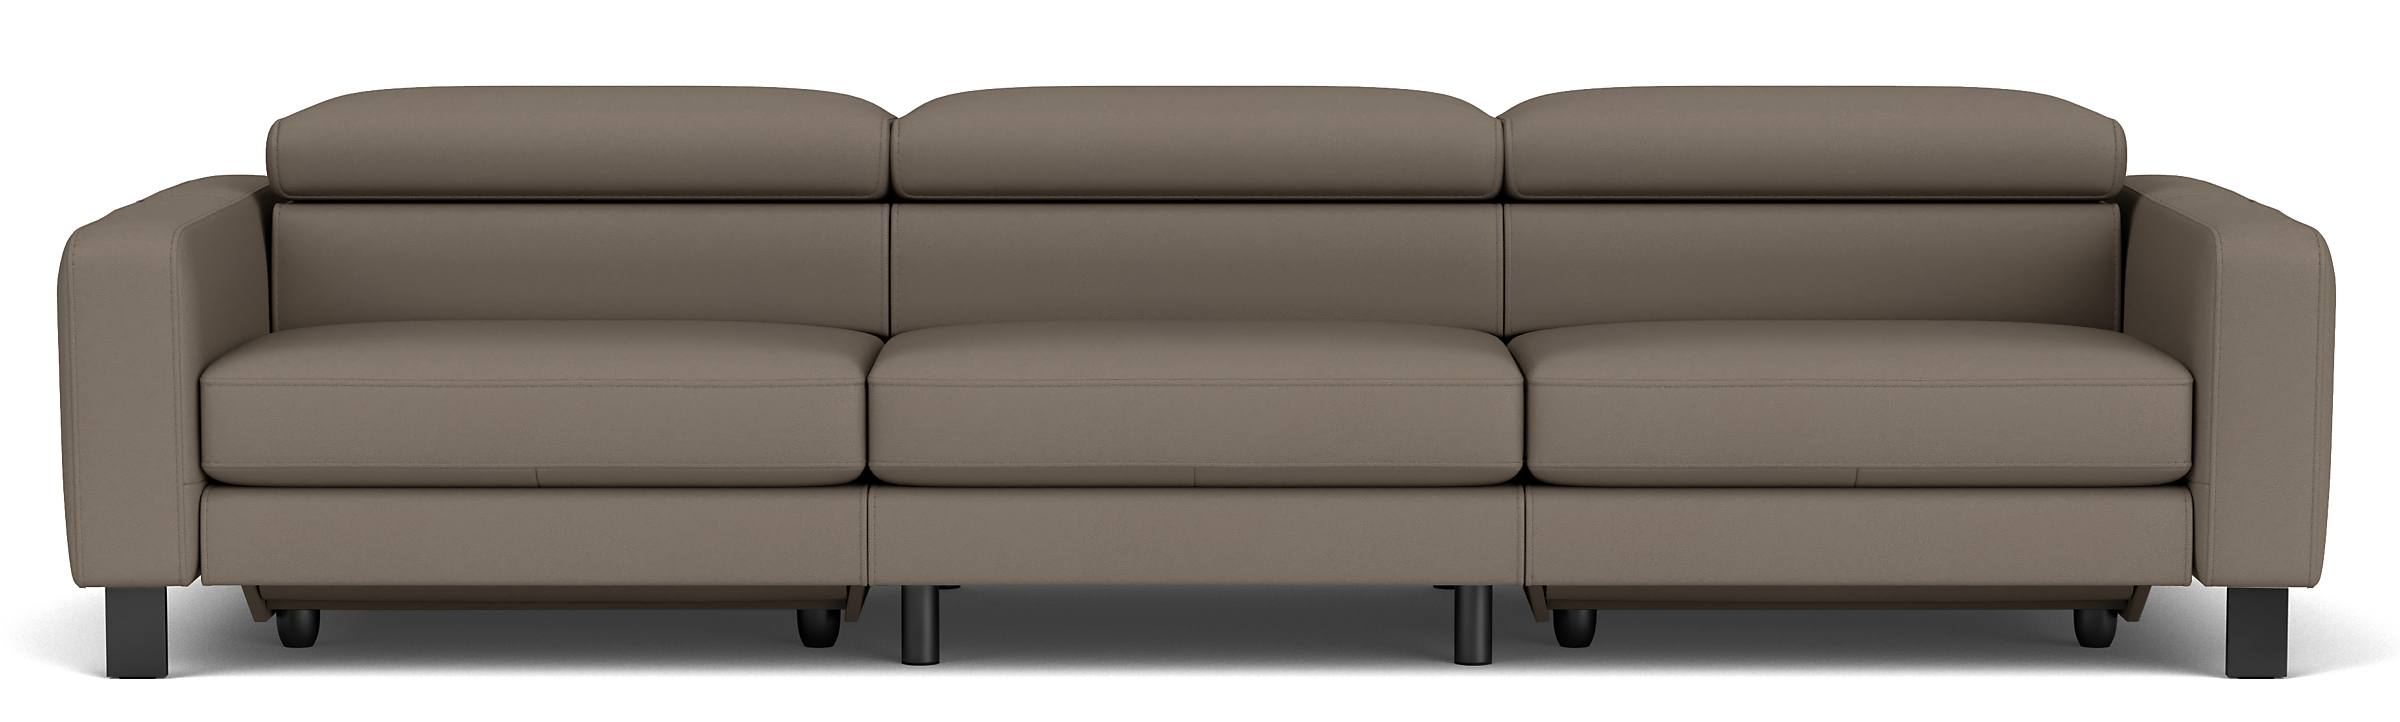 Elio Leather Power-reclining Sofas